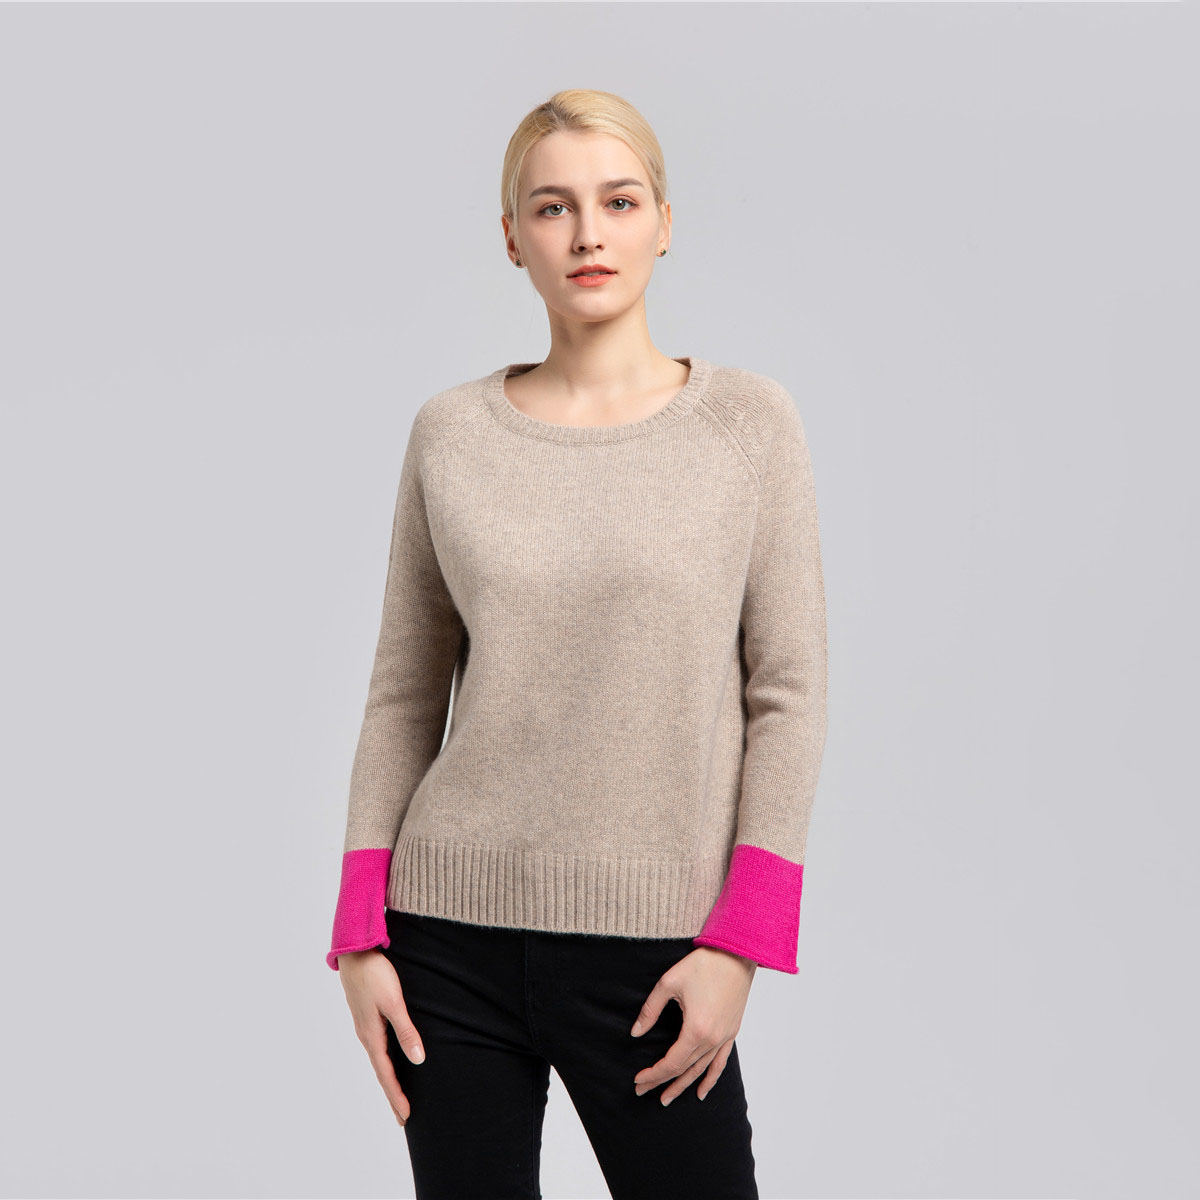 women's pure cashmere sweater super warm